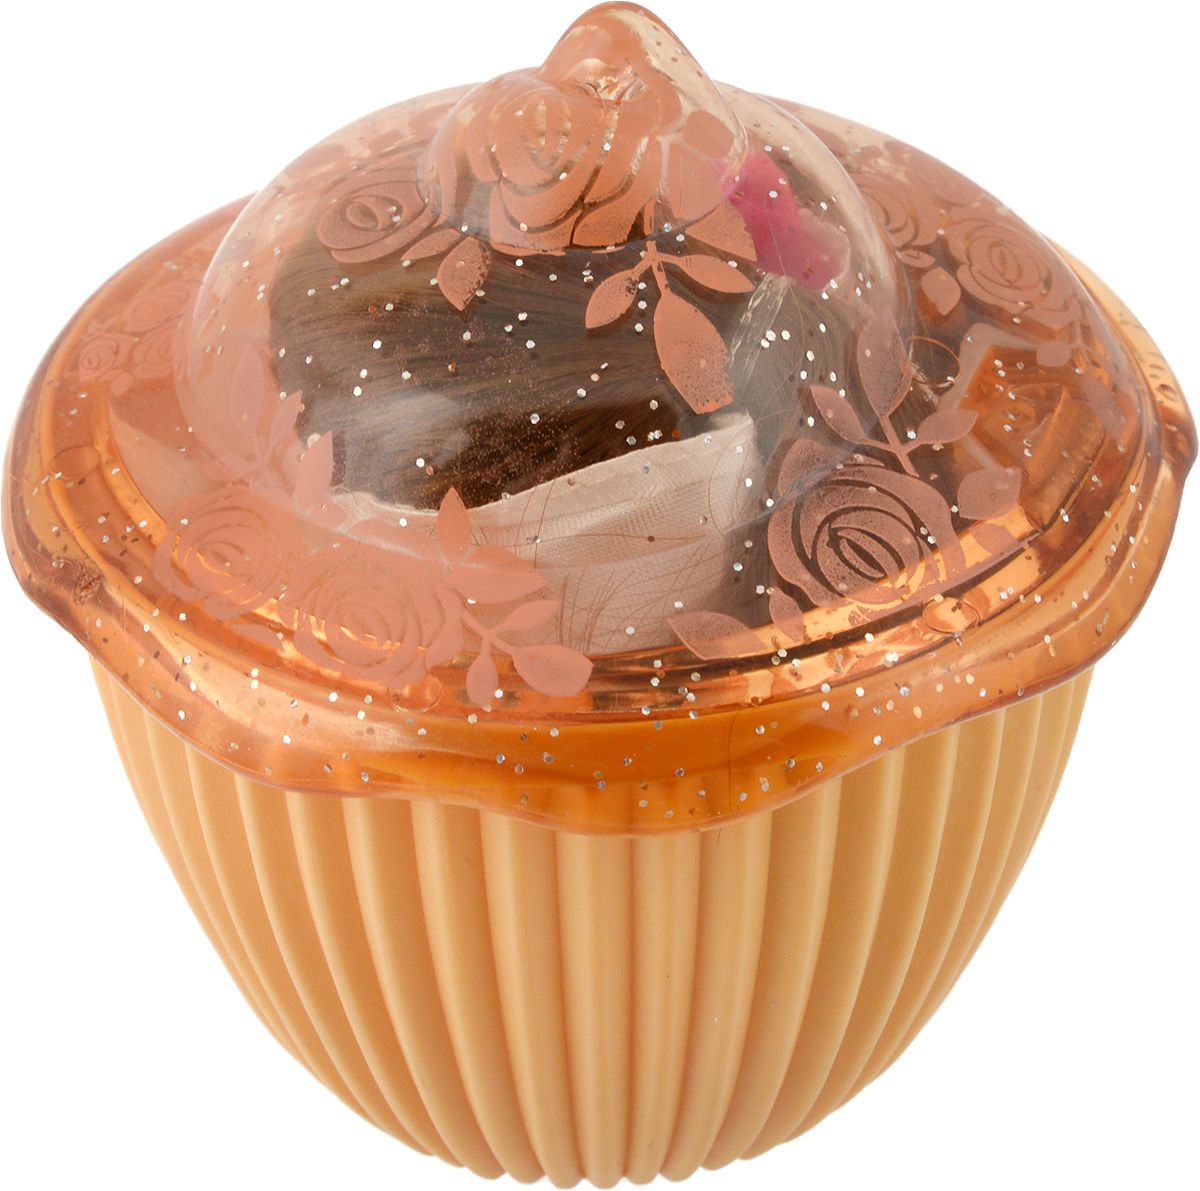 Emco - Cupcake Surprise   -